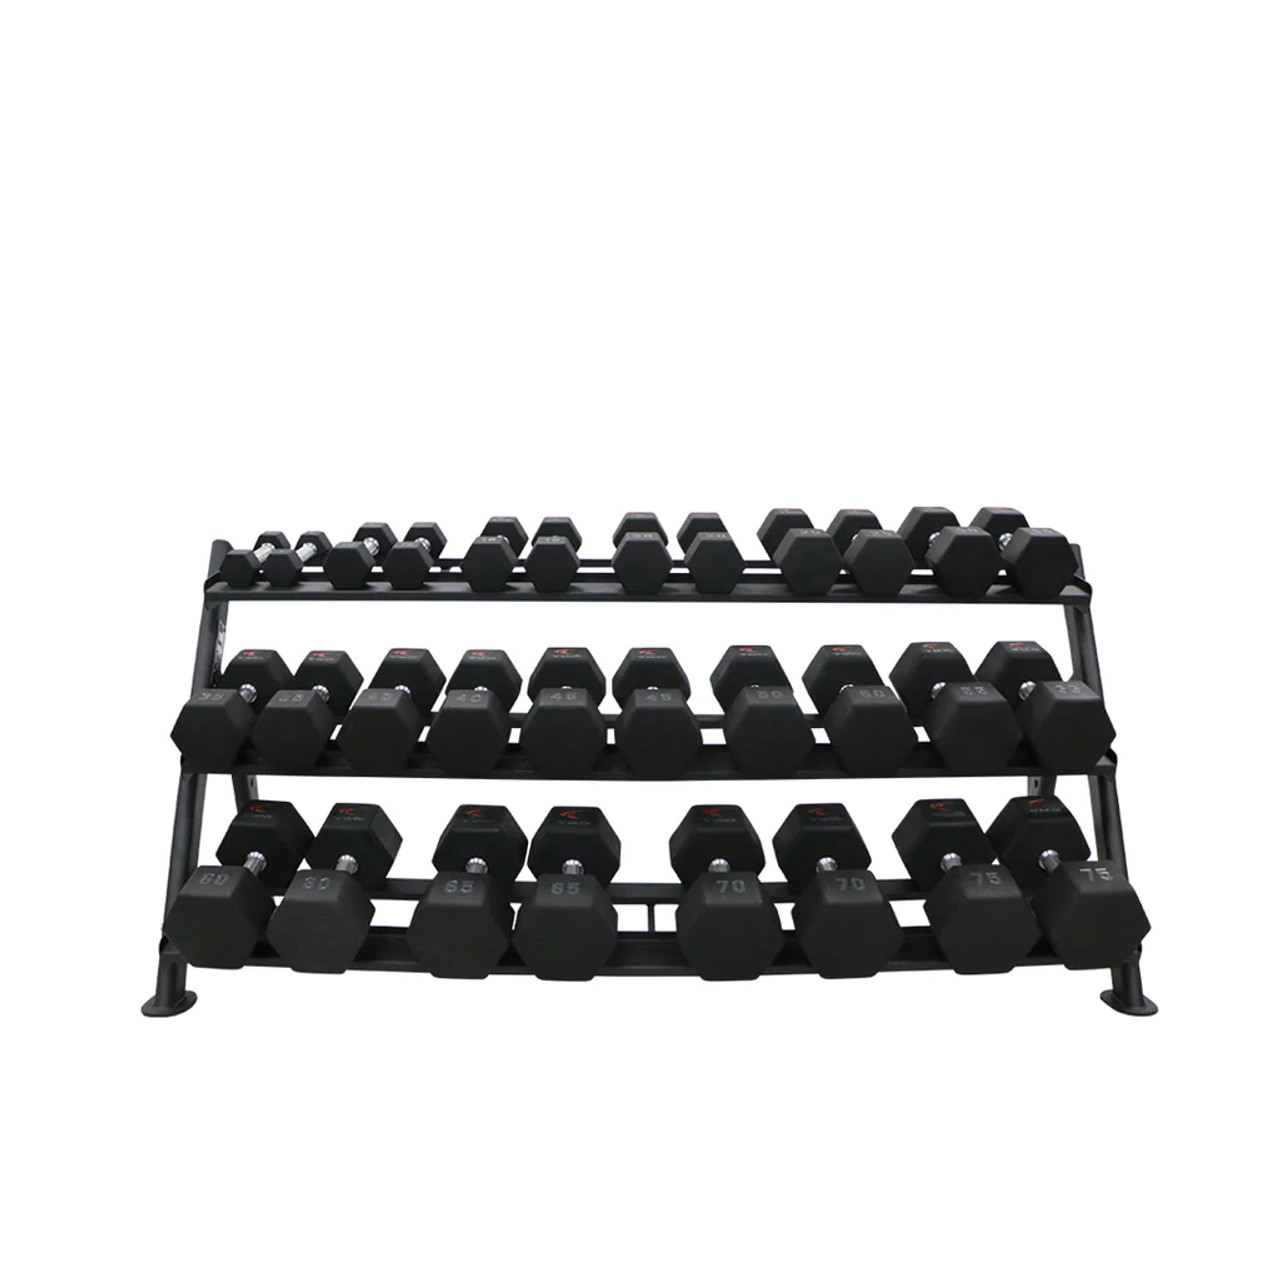 Body-Solid - Dumbell Rack, 3 tier Horizontal – Weight Room Equipment